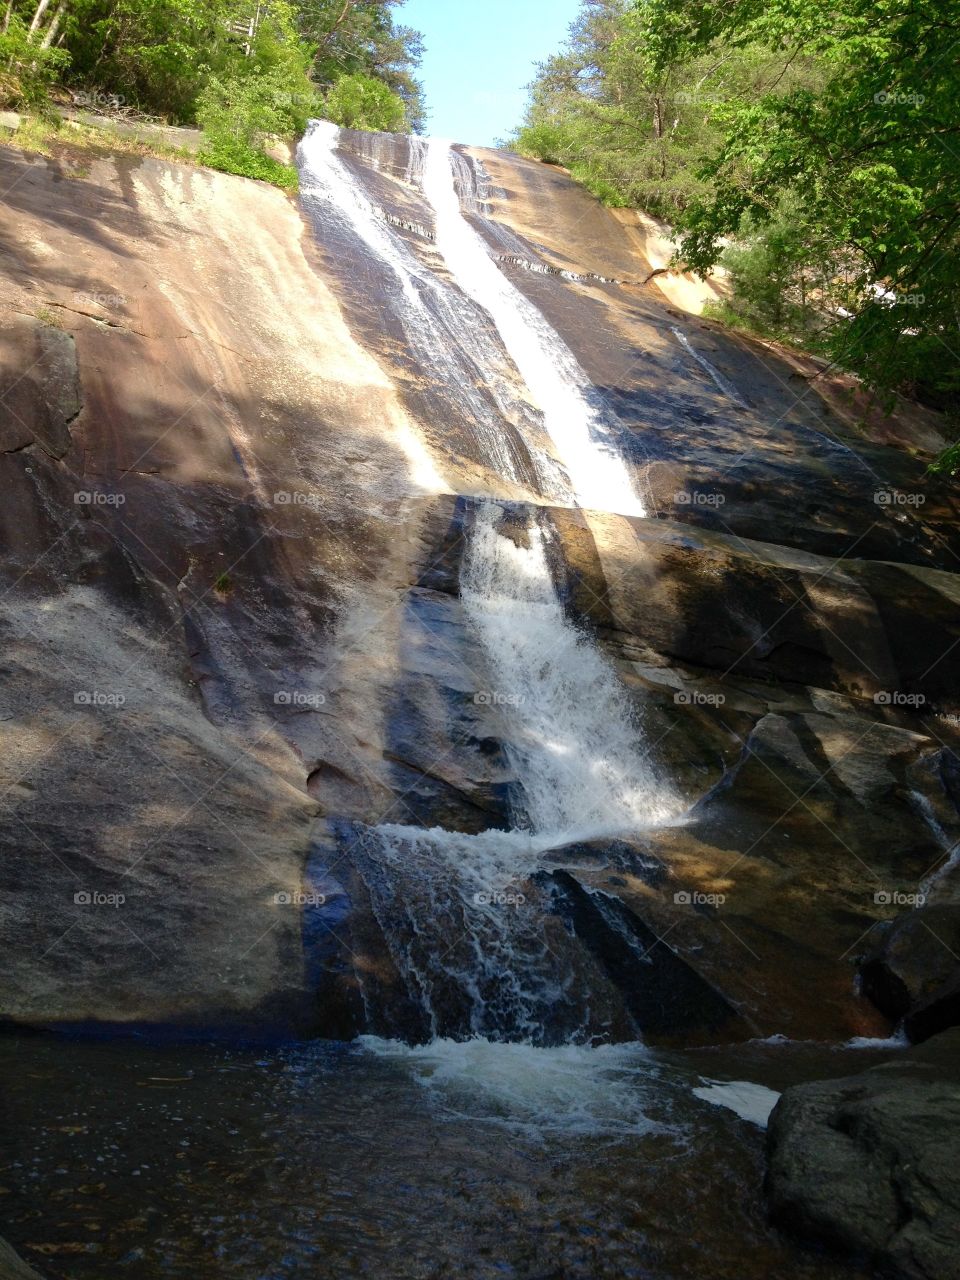 The Splash from below. Sitting below the waterfall 